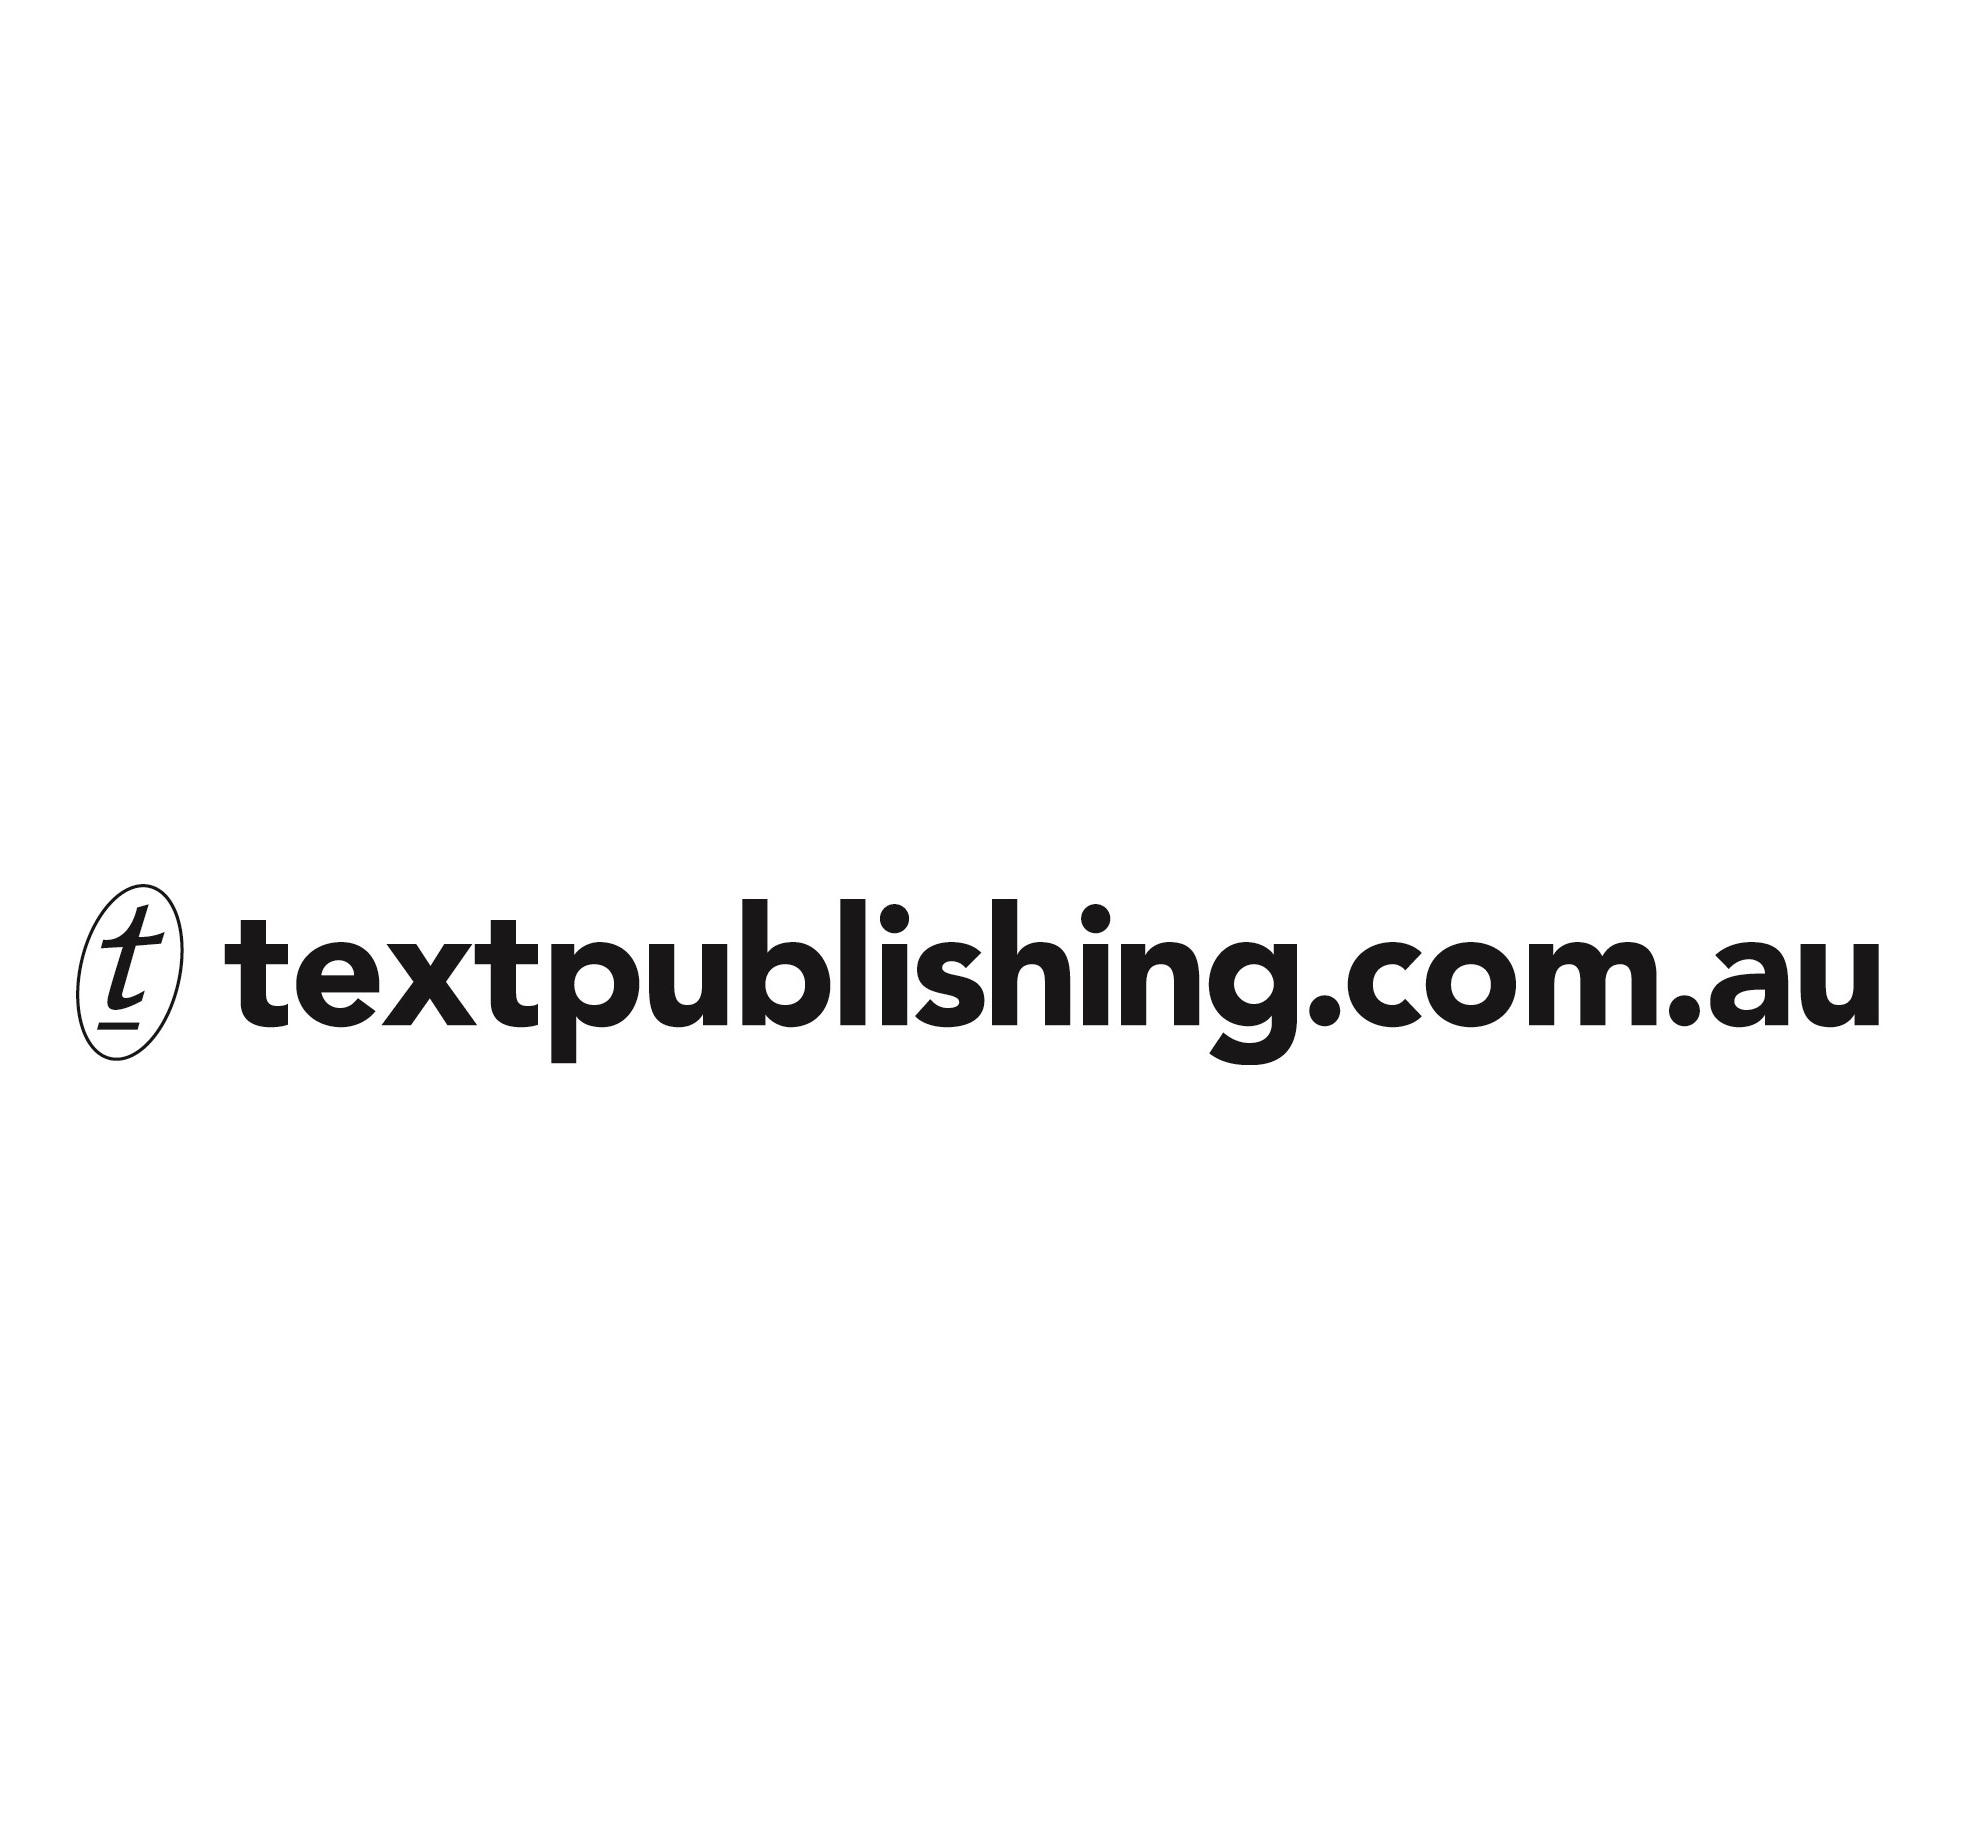 Text Publishing